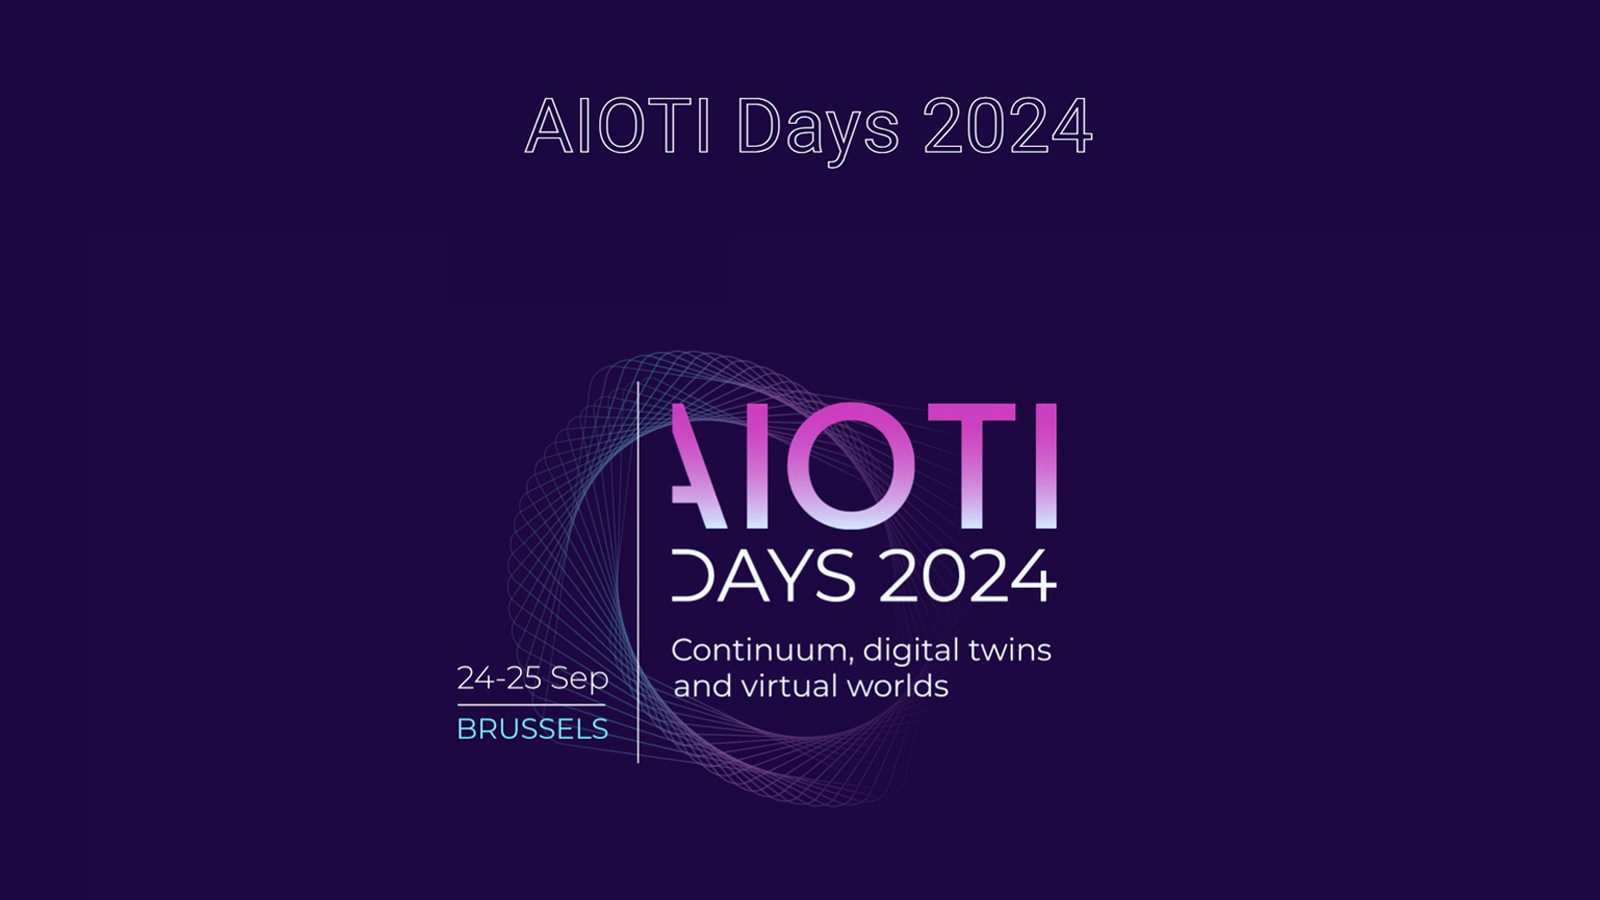 AIOTI Days 2024